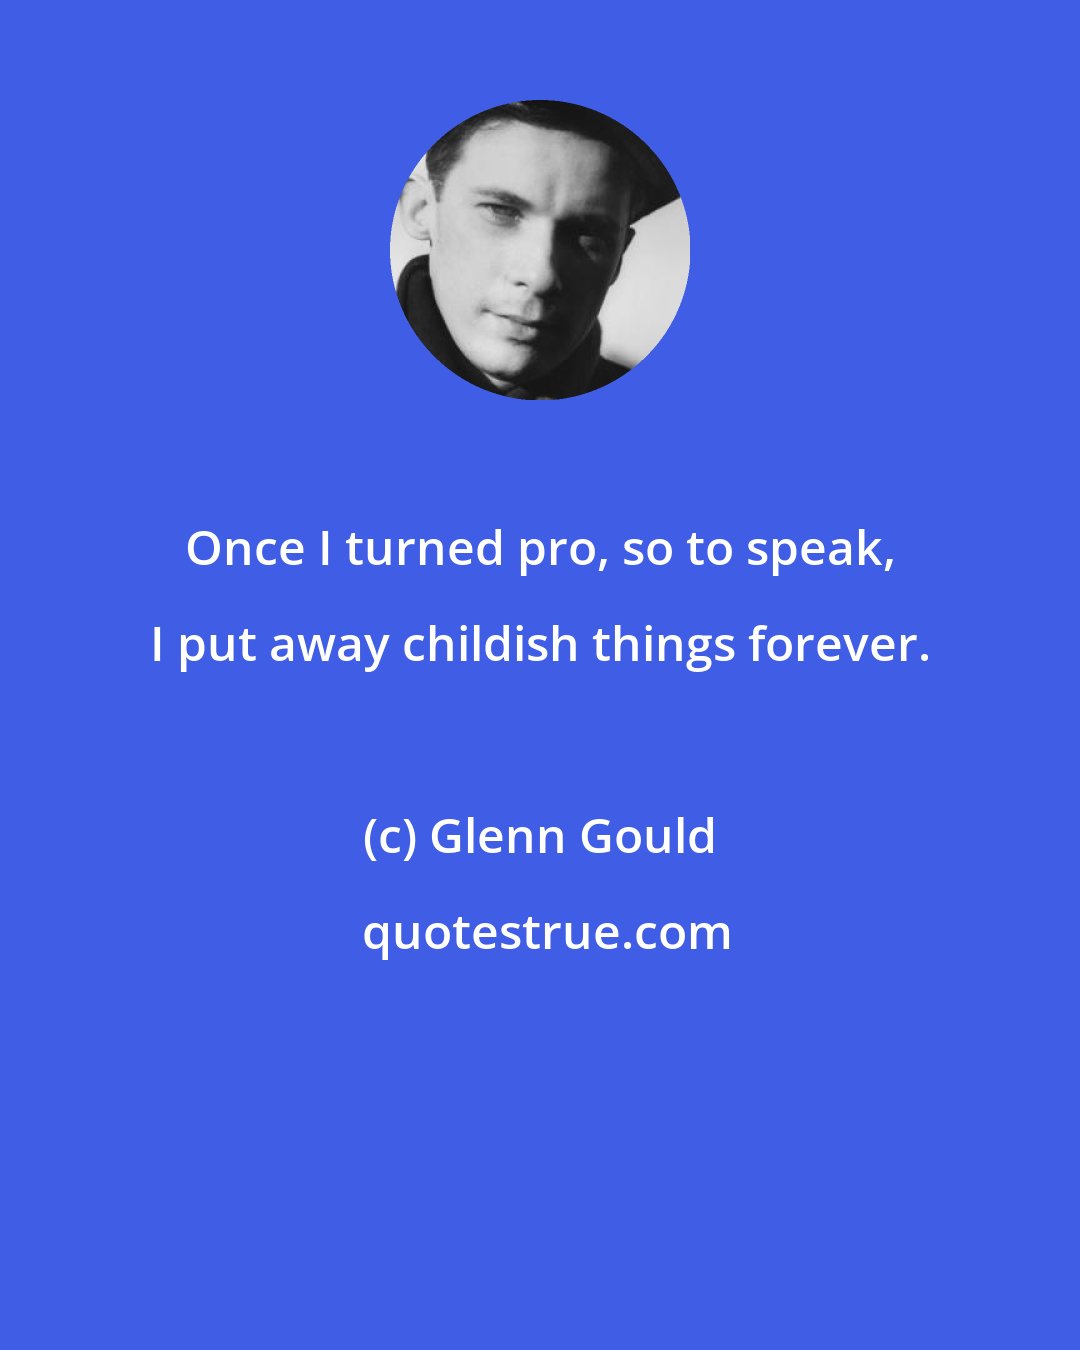 Glenn Gould: Once I turned pro, so to speak, I put away childish things forever.